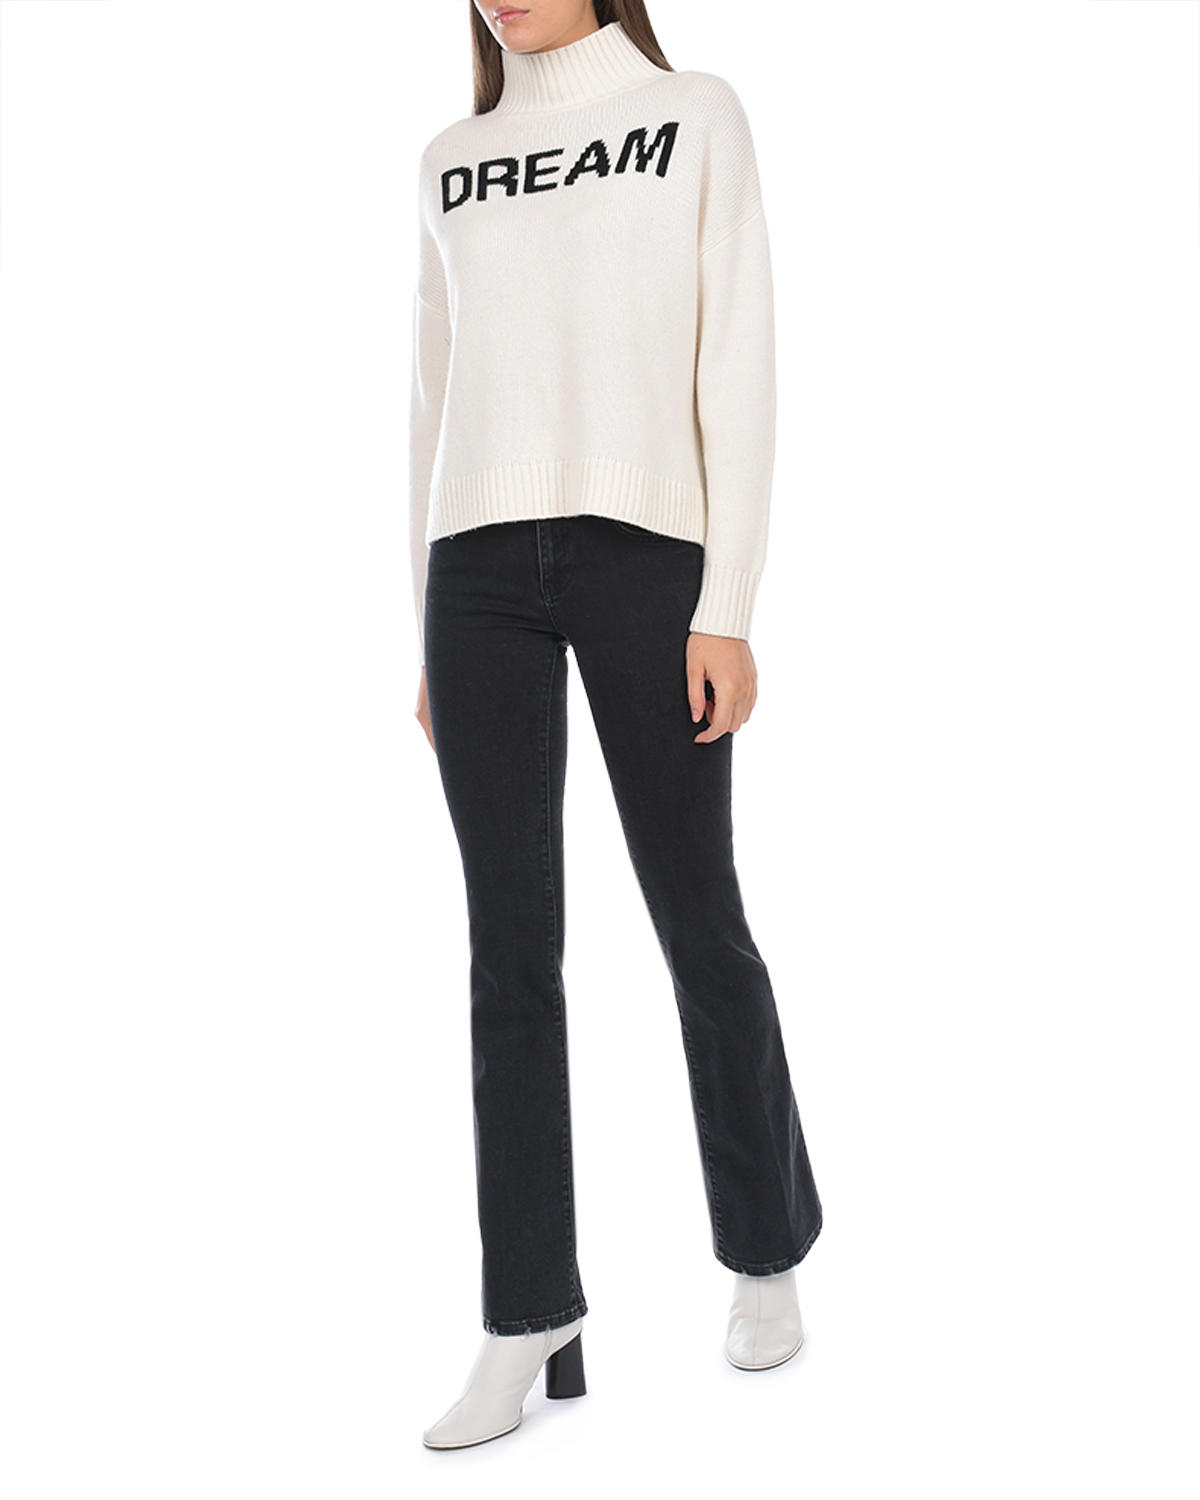 Джемпер молочного цвета с принтом "Dream" Allude, размер 38 - фото 3